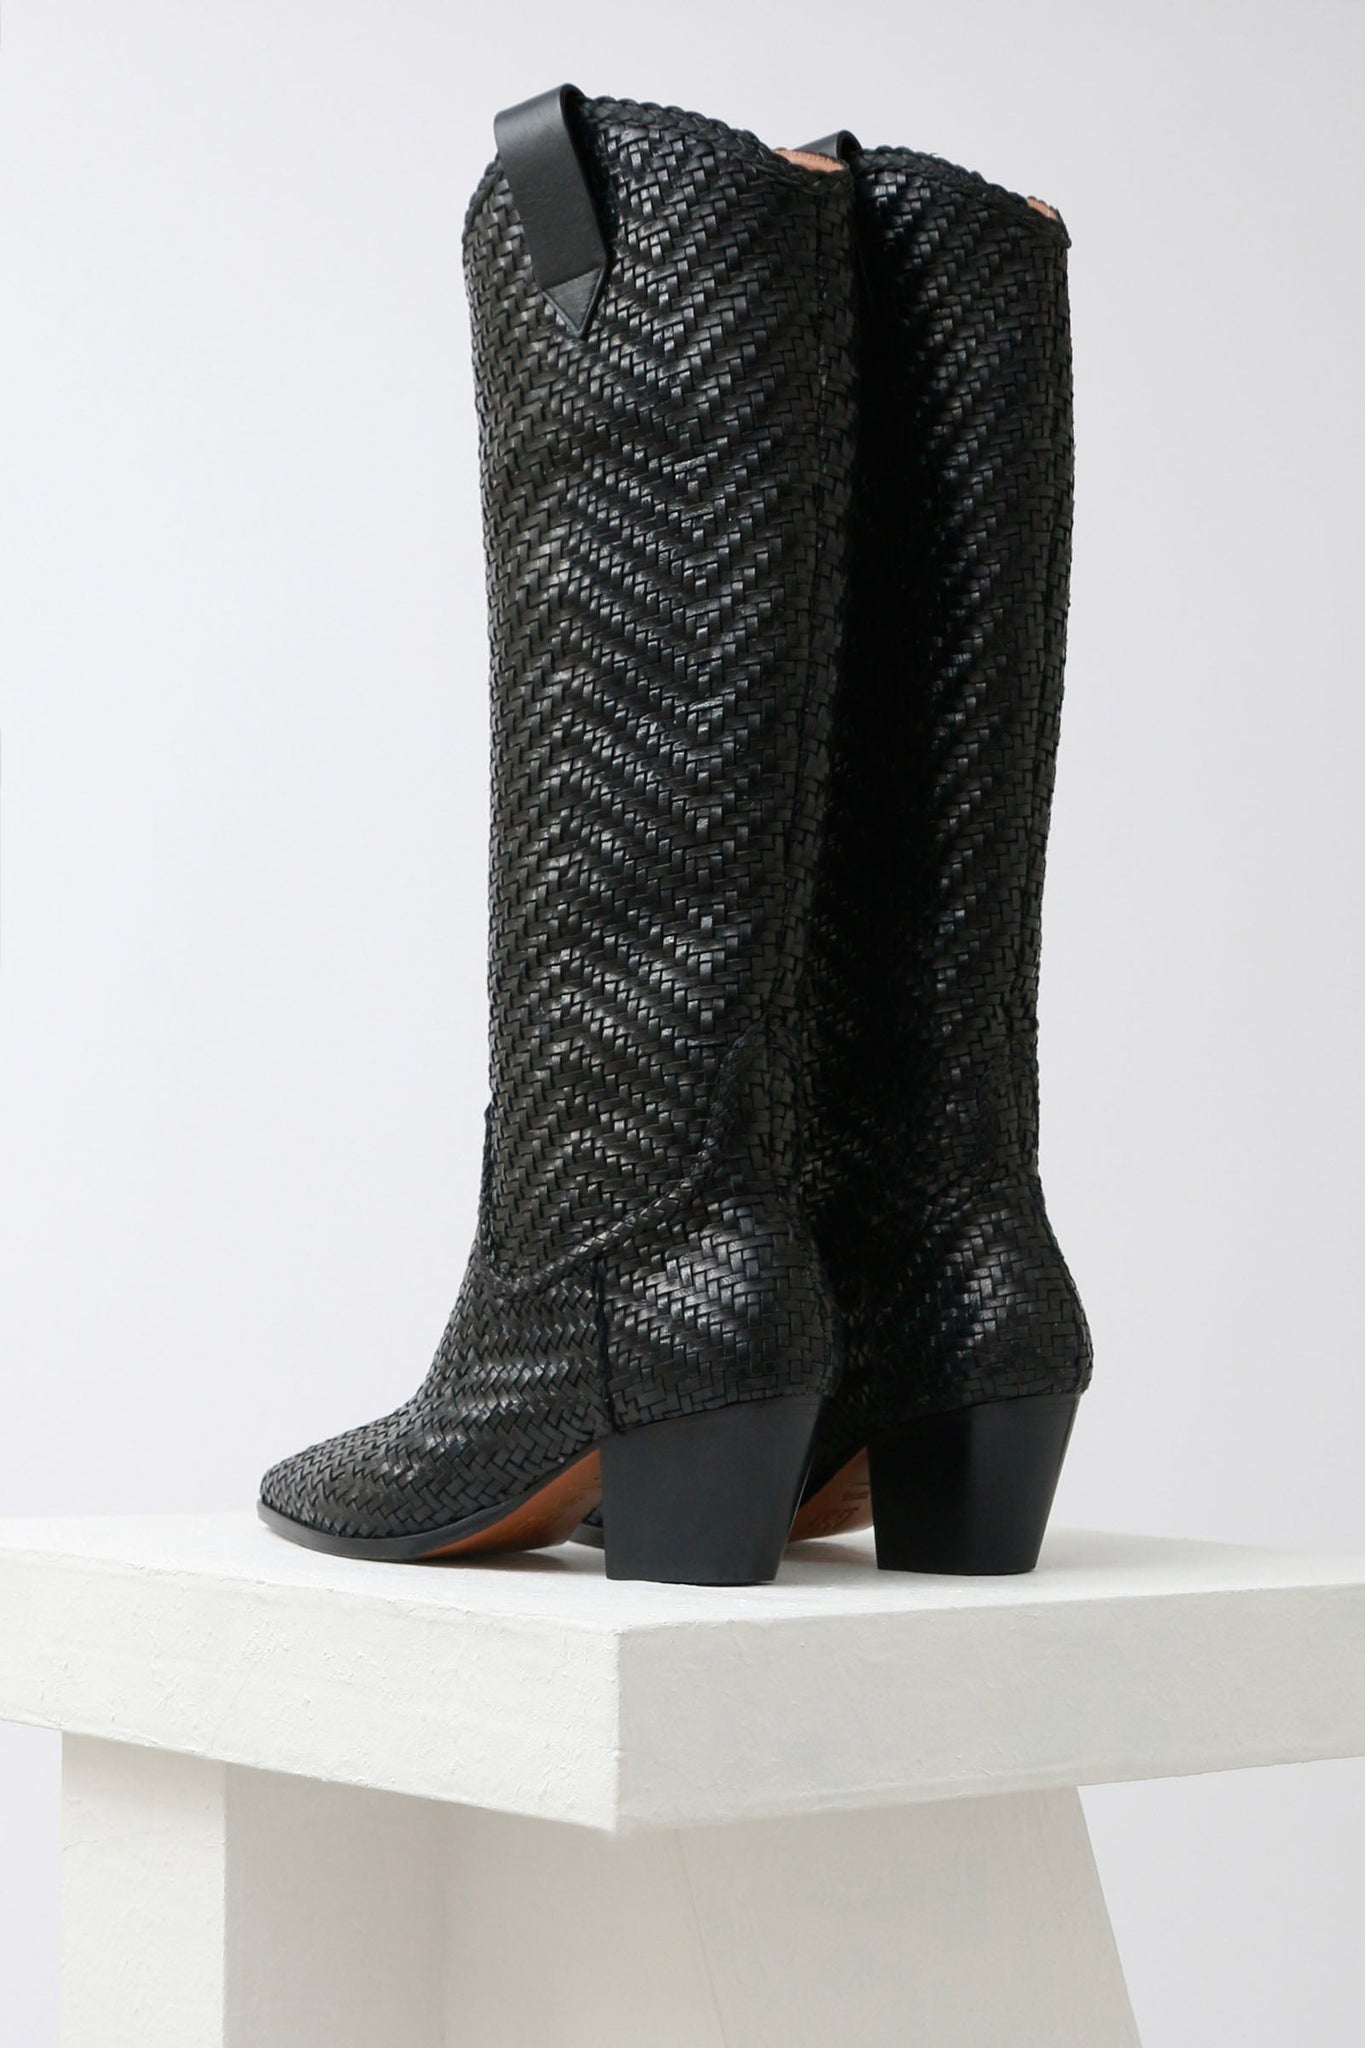 Souliers Martinez Shoes GUADALAJARA - Black Woven Leather Boots 